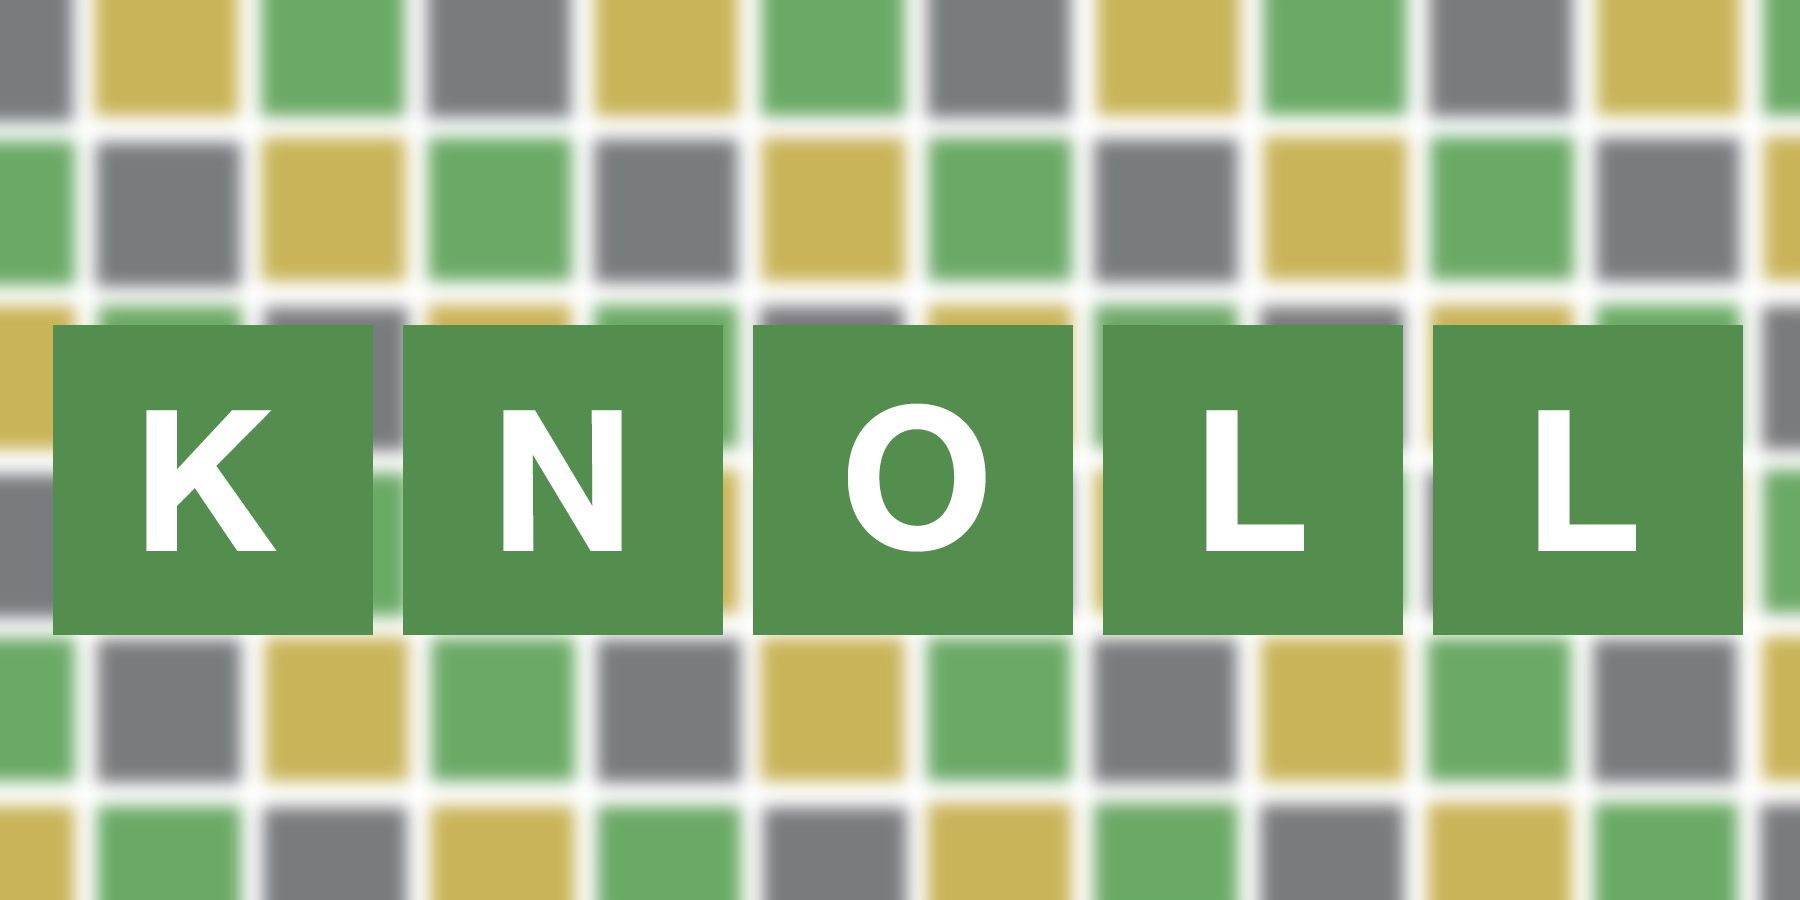 KNOLL (Wordle #219 - January 24, 2022)